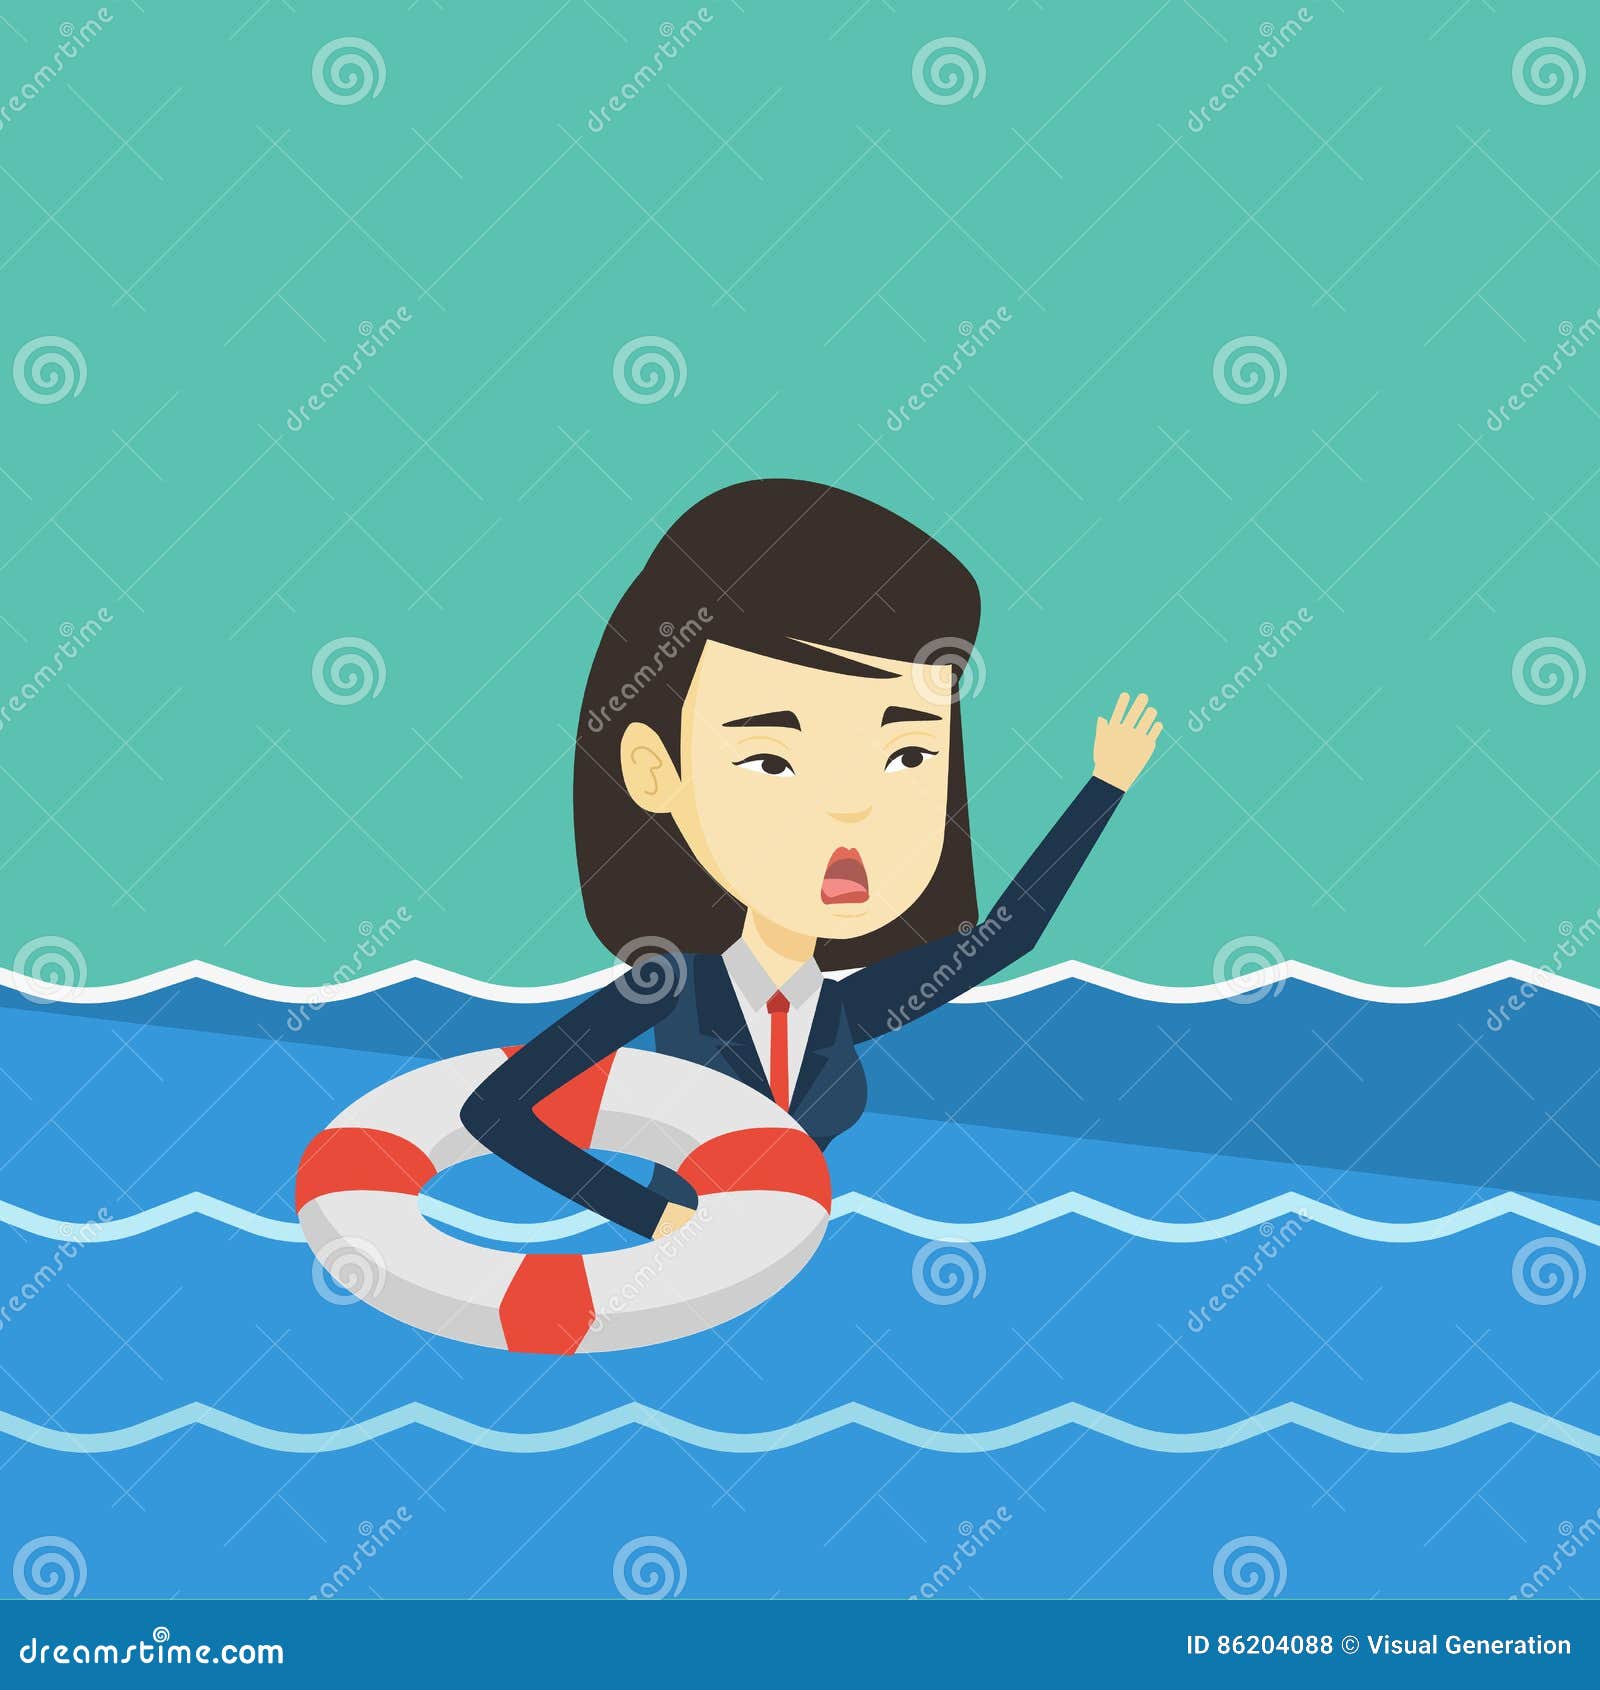 Sinking Man In Lifebuoy Royalty-Free Stock Photography | CartoonDealer ...